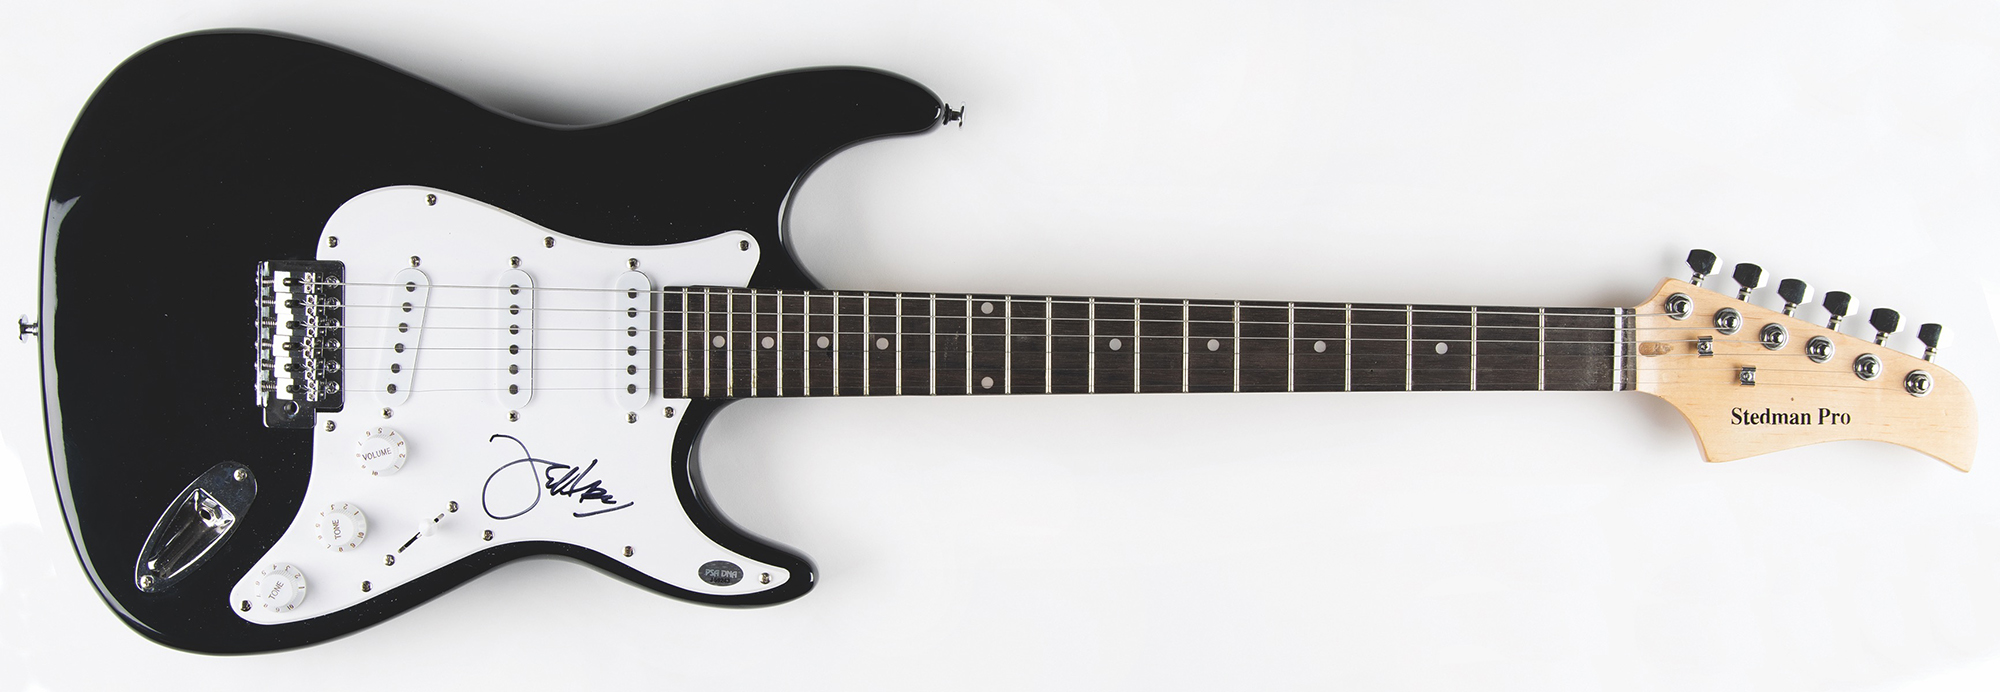 Lot #2254 Jeff Beck Signed Guitar - Image 1